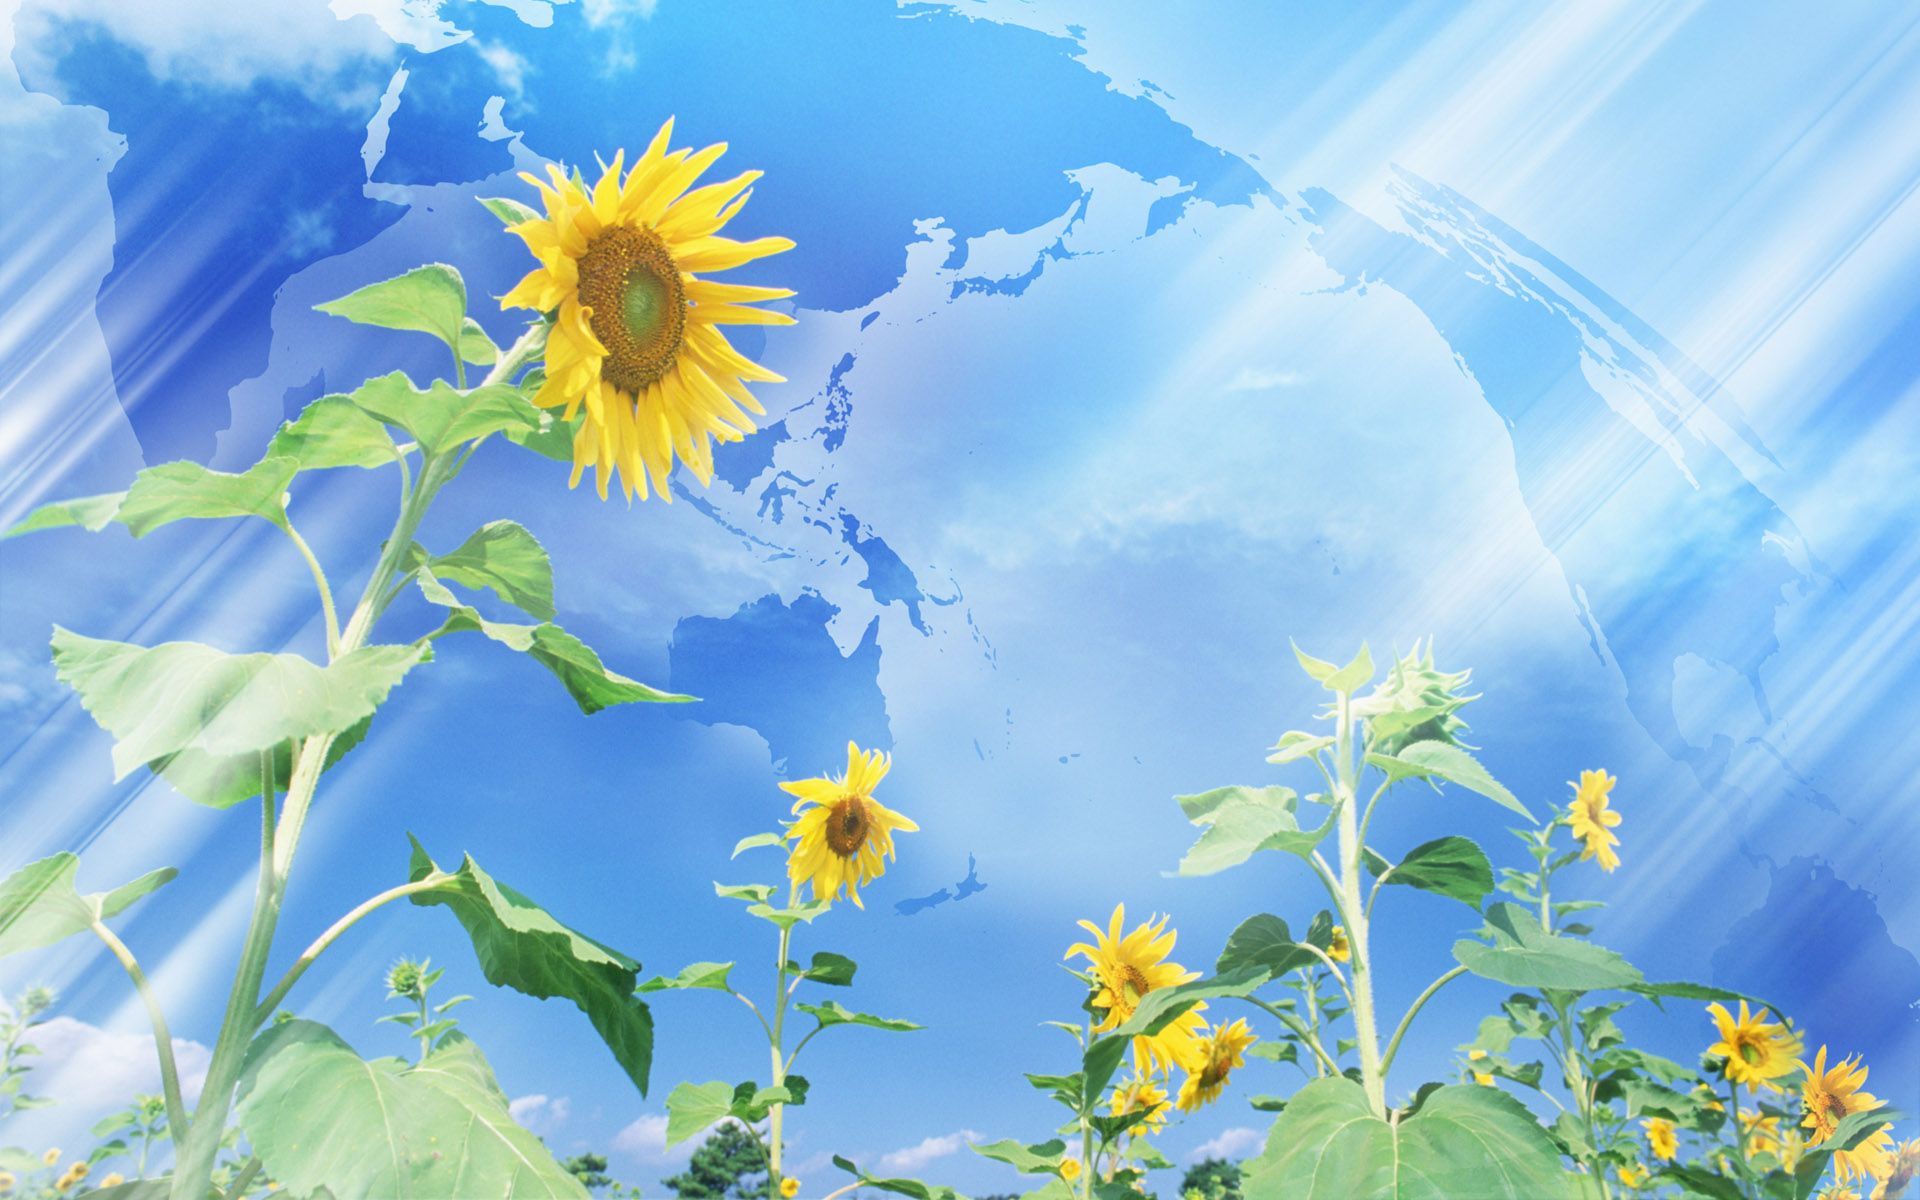 Anime Girl in Sunflowers Field – Diamond Painting Bliss